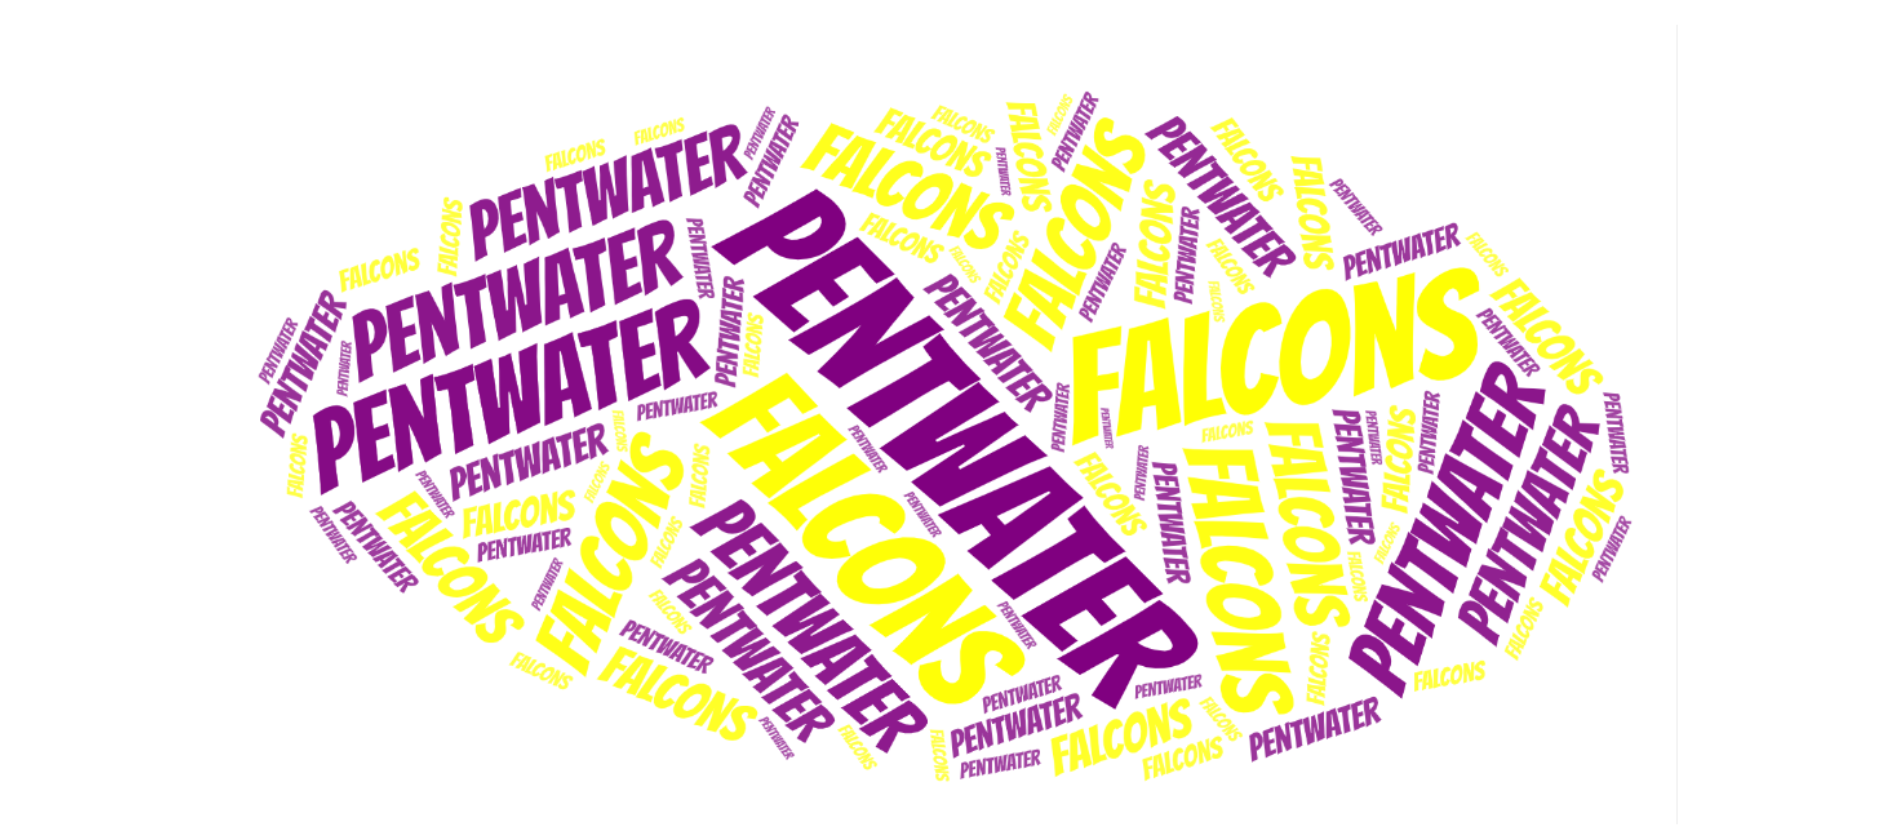 Pentwater Falcons Word Cloud Art Generator